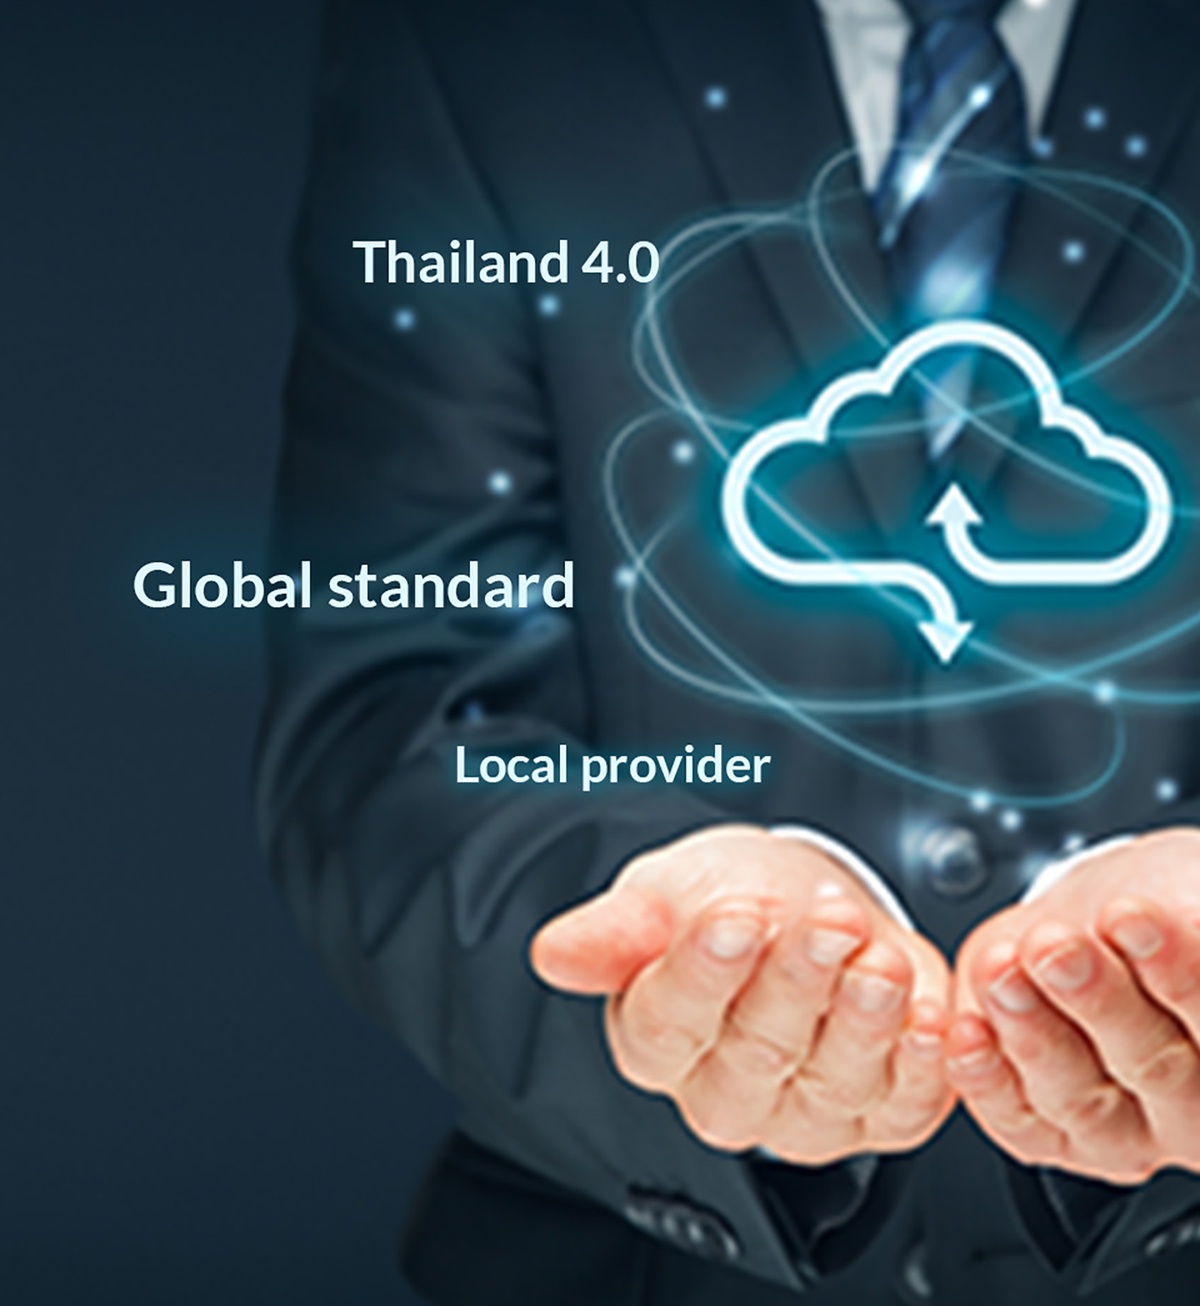 Nipa Cloud Selects Juniper Networks to Help Accelerate Digital Transformation Across Thailand's Enterprises